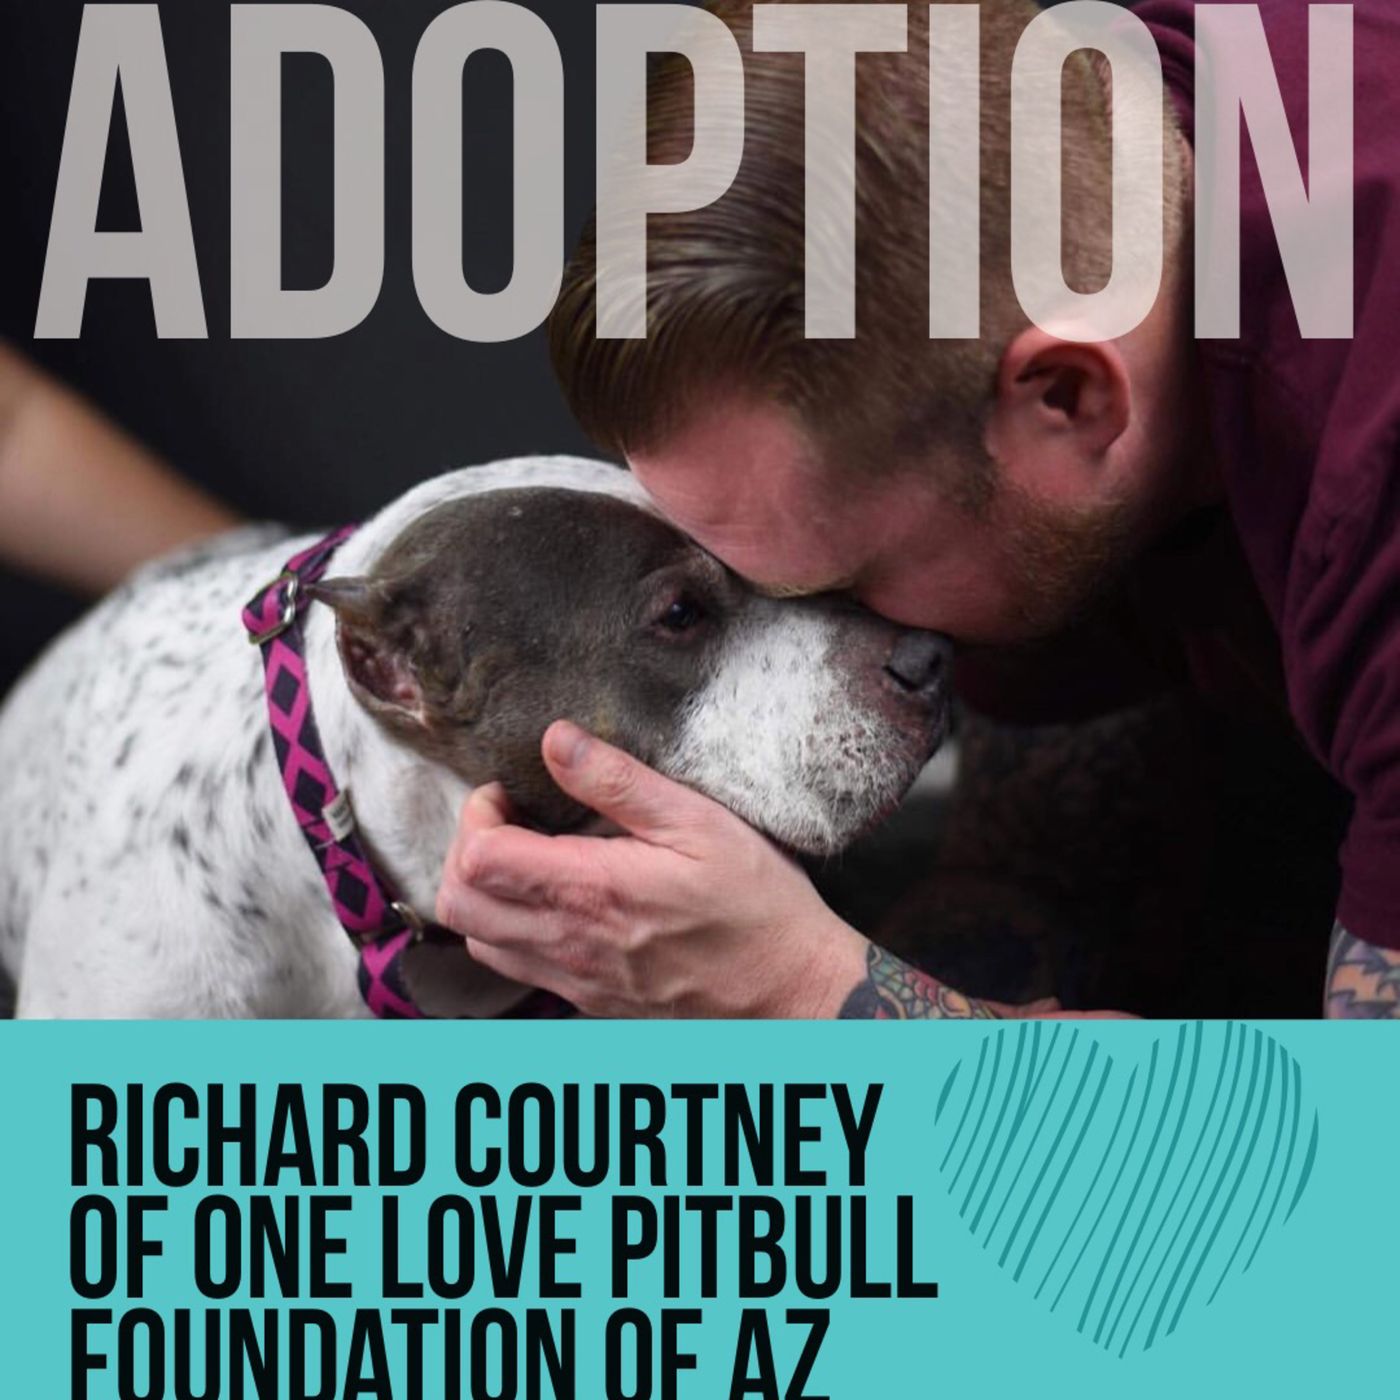 Richard Courtney talks Adoption: Expectations & Advice